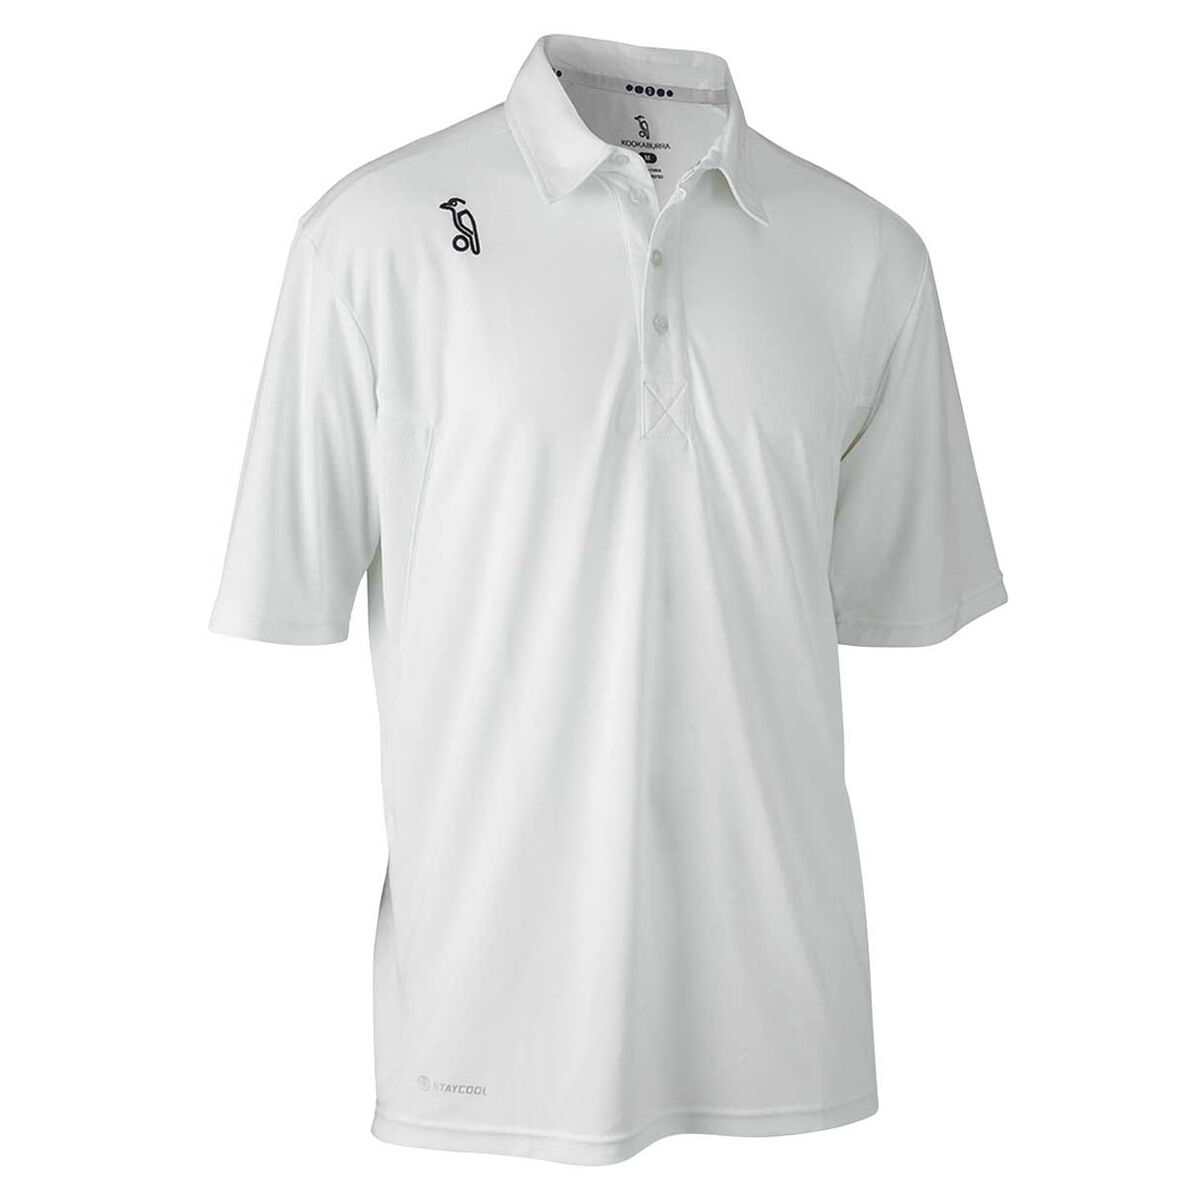 cricket white shirt